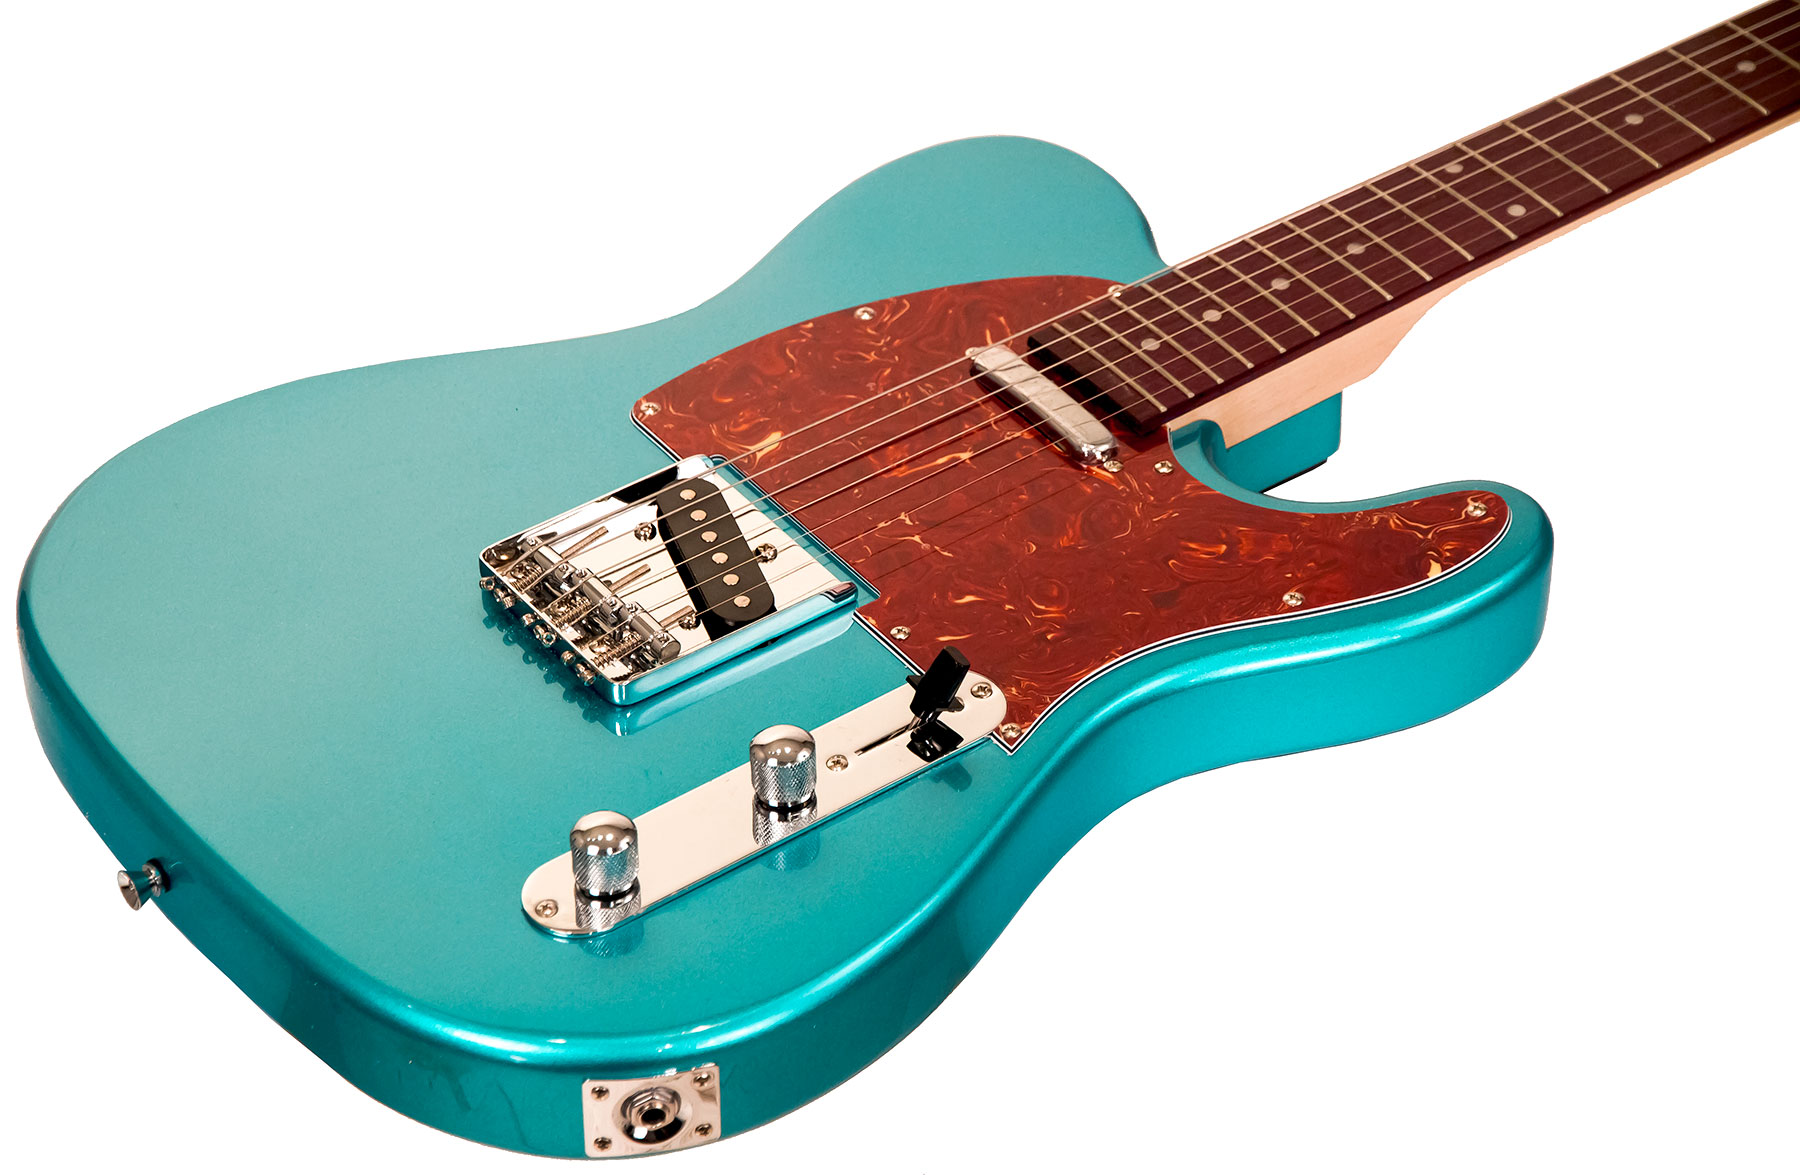 Eastone Tl70 Ss Ht Pur - Metallic Light Blue - Guitarra eléctrica con forma de tel - Variation 1